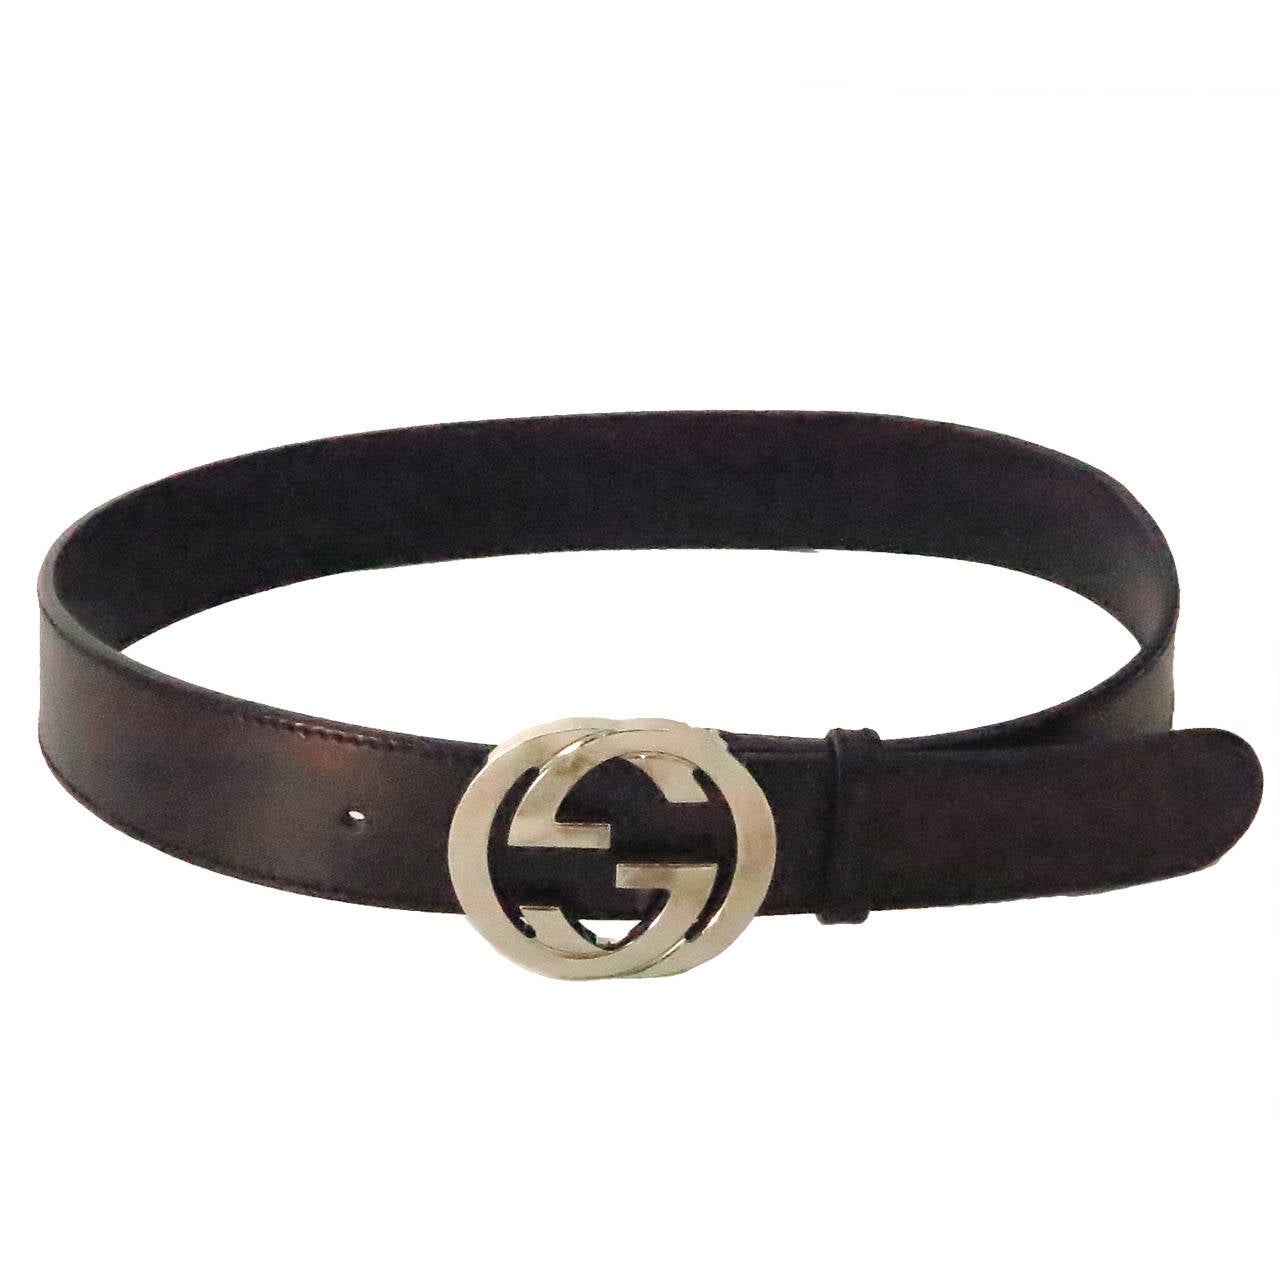 Gucci dark metallic leather belt with silver logo buckle